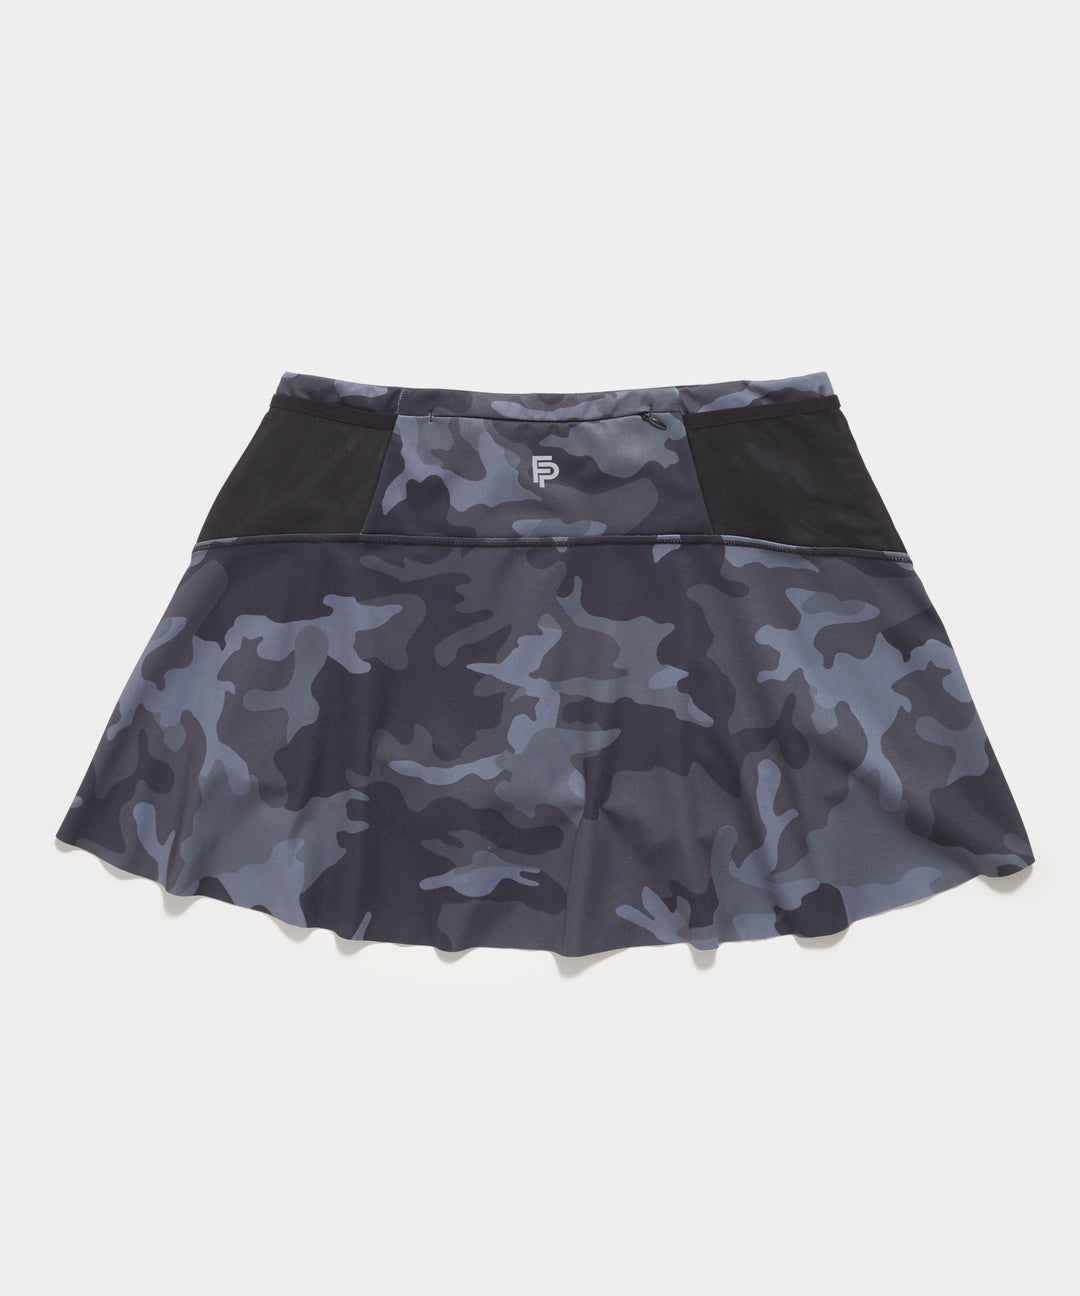 Women's Advantage Tennis Skirt Black Camo Camouflage